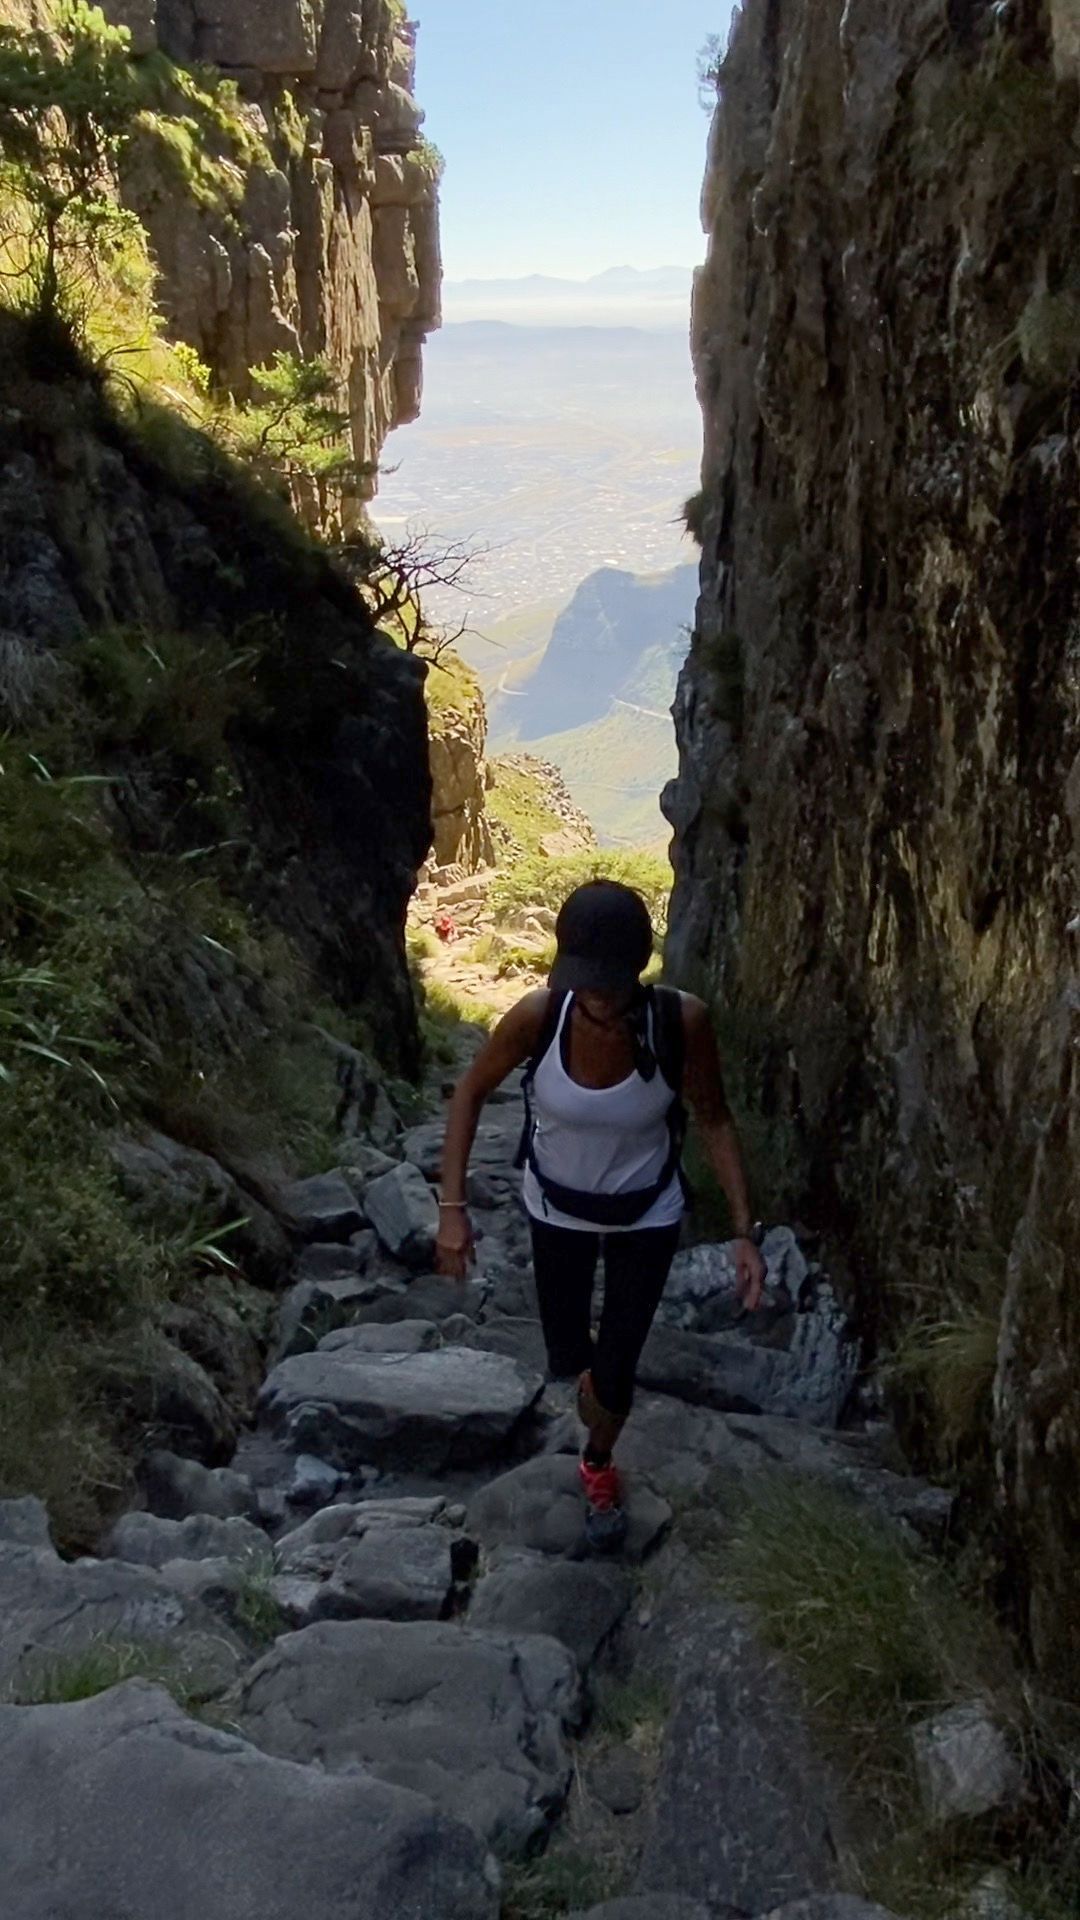 Platteklip Gorge Hiking Trail: A Breathtaking Exit on Table Mountain